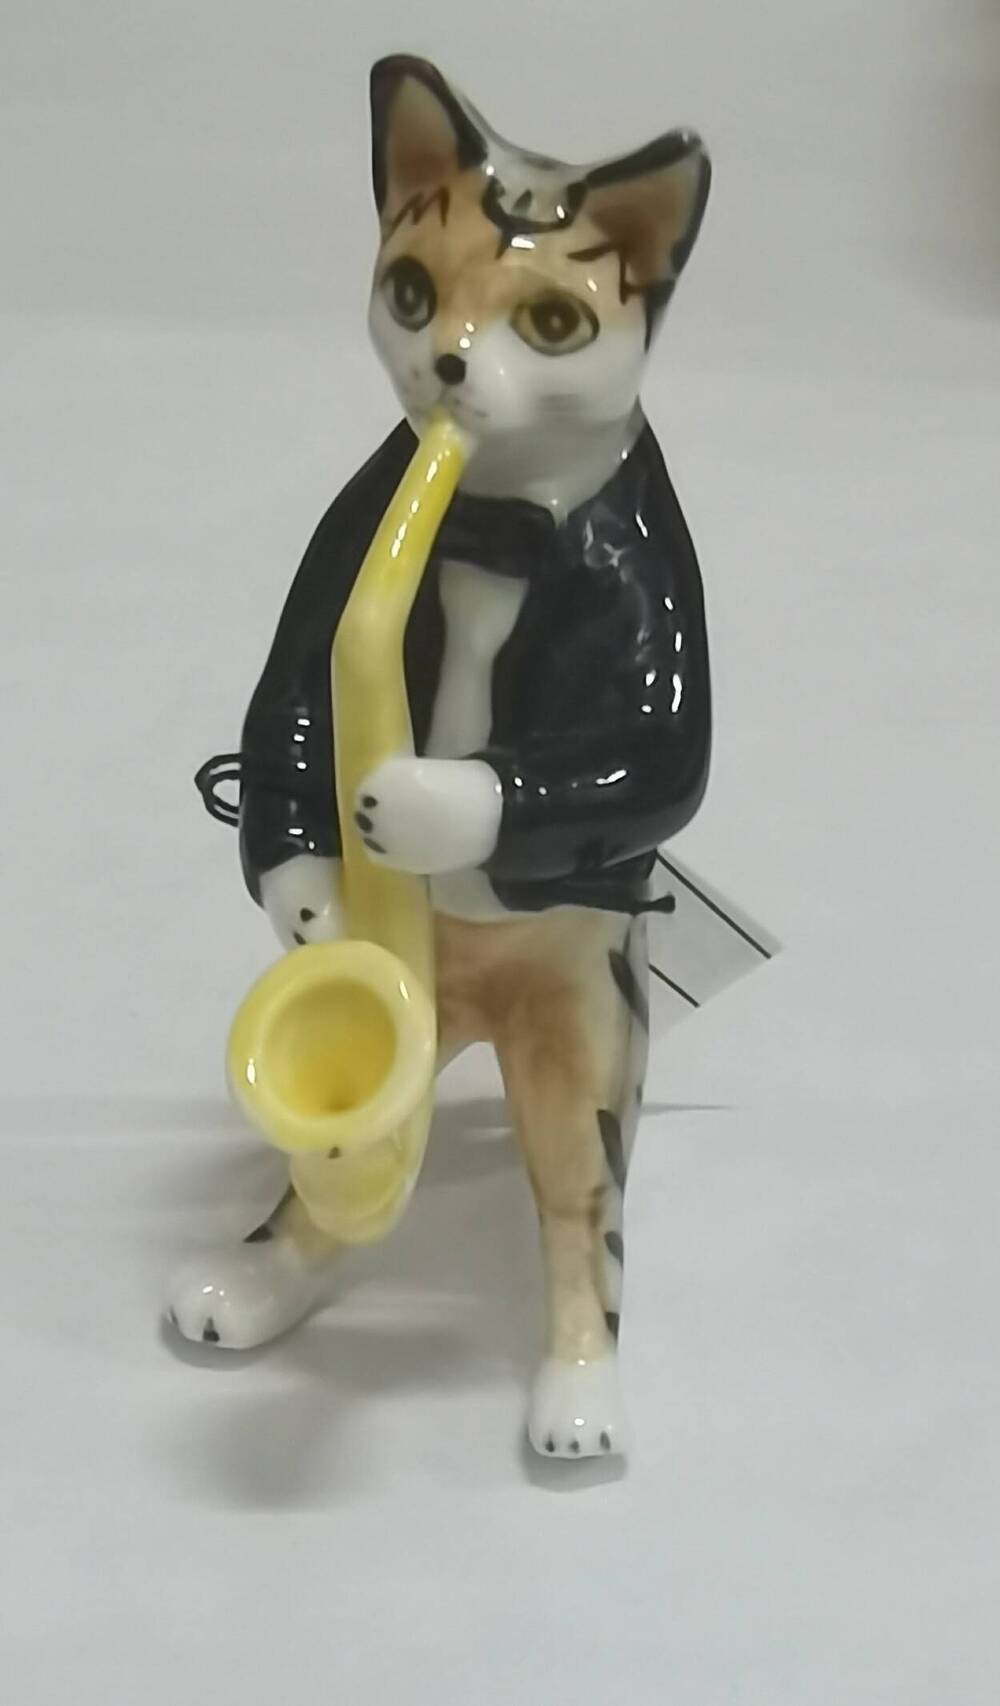 Статуэтка Кот с саксафоном из серии Коты - музыканты,2011 г.